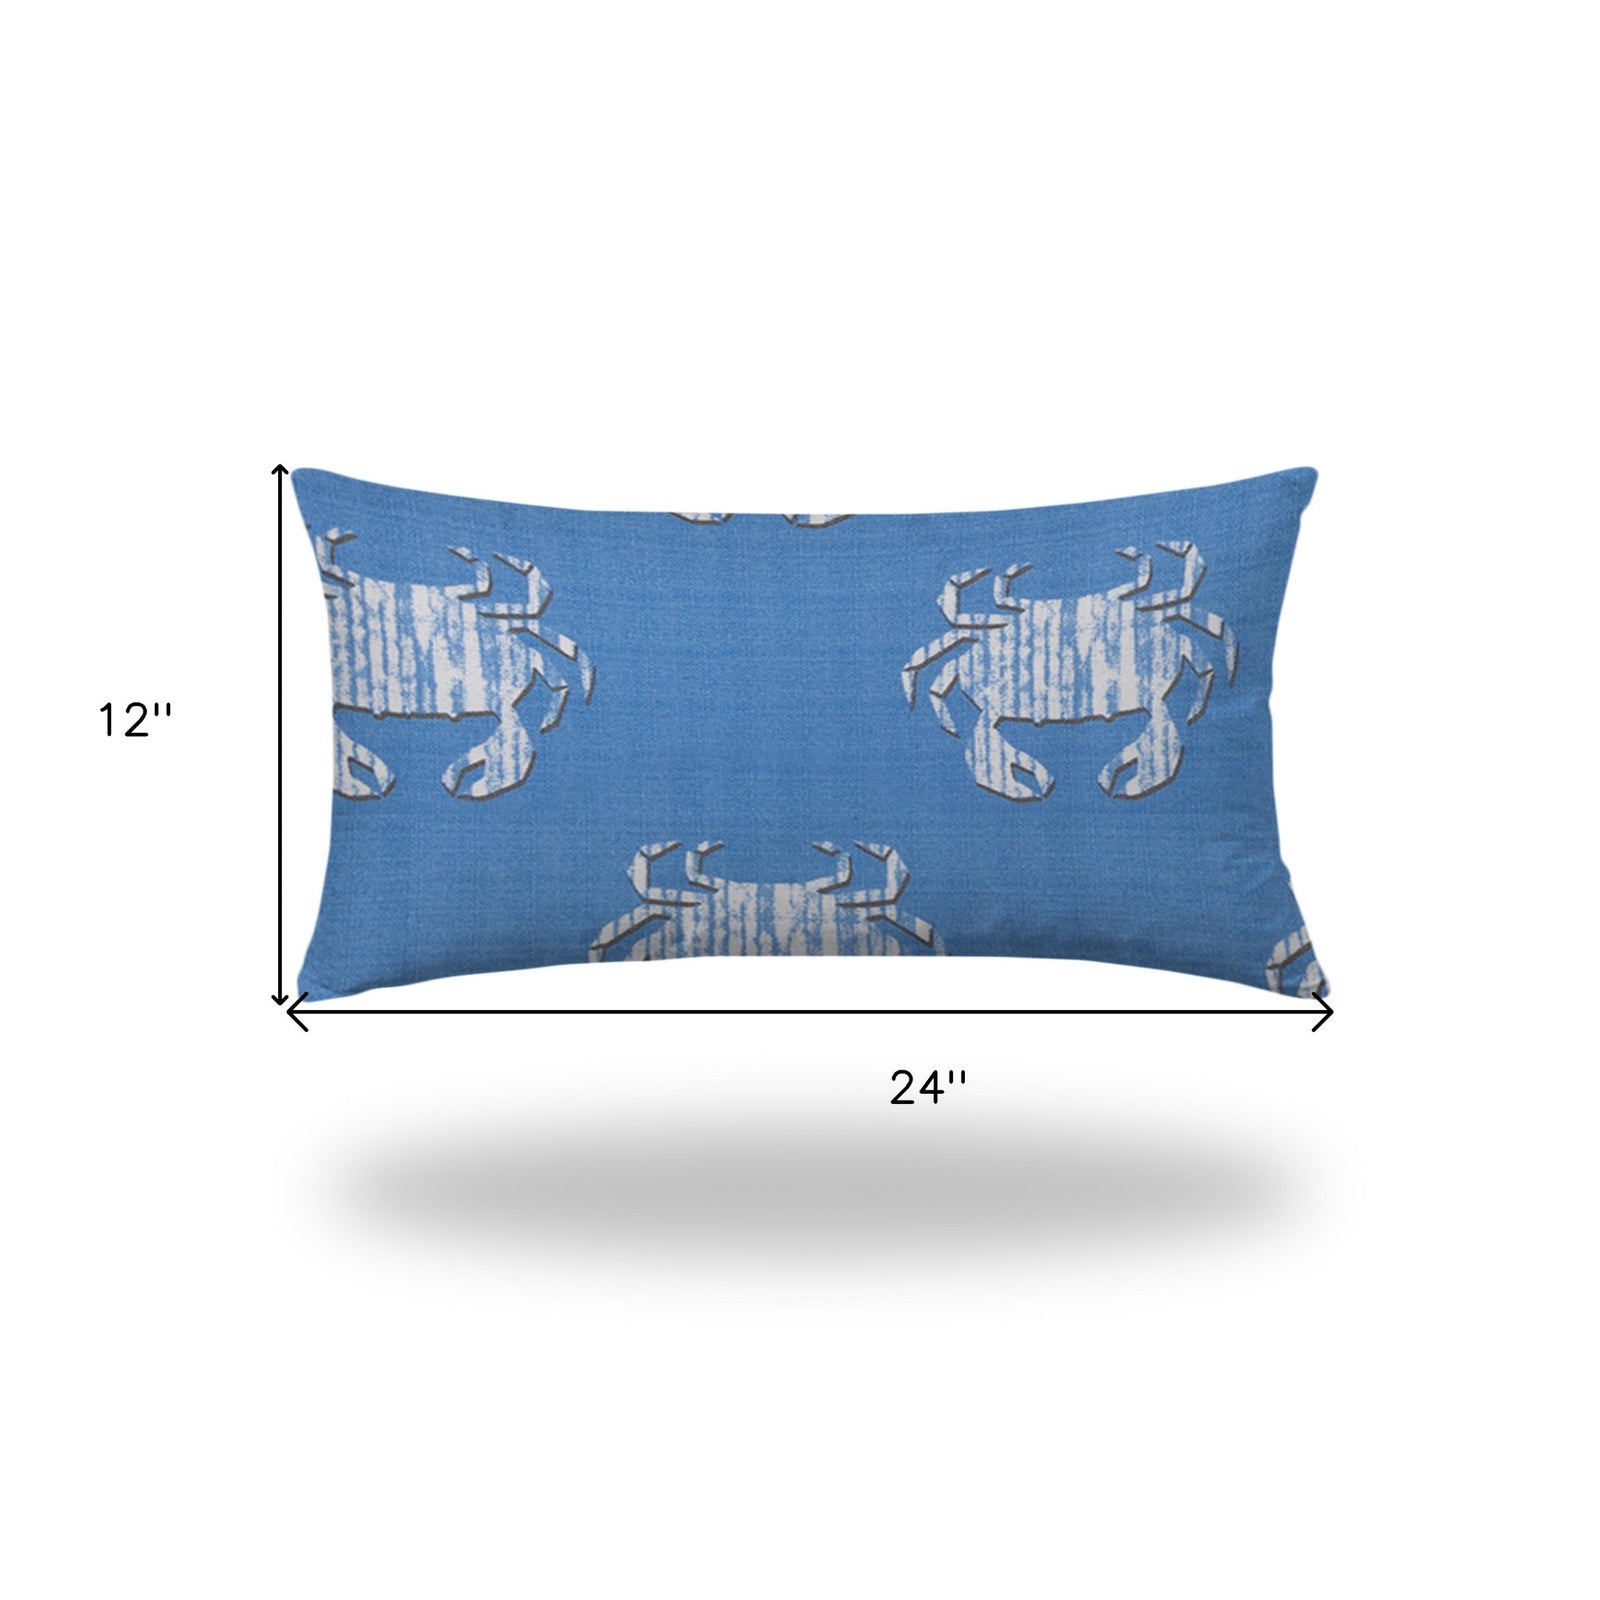 14" X 24" Blue And White Crab Enveloped Coastal Lumbar Indoor Outdoor Pillow